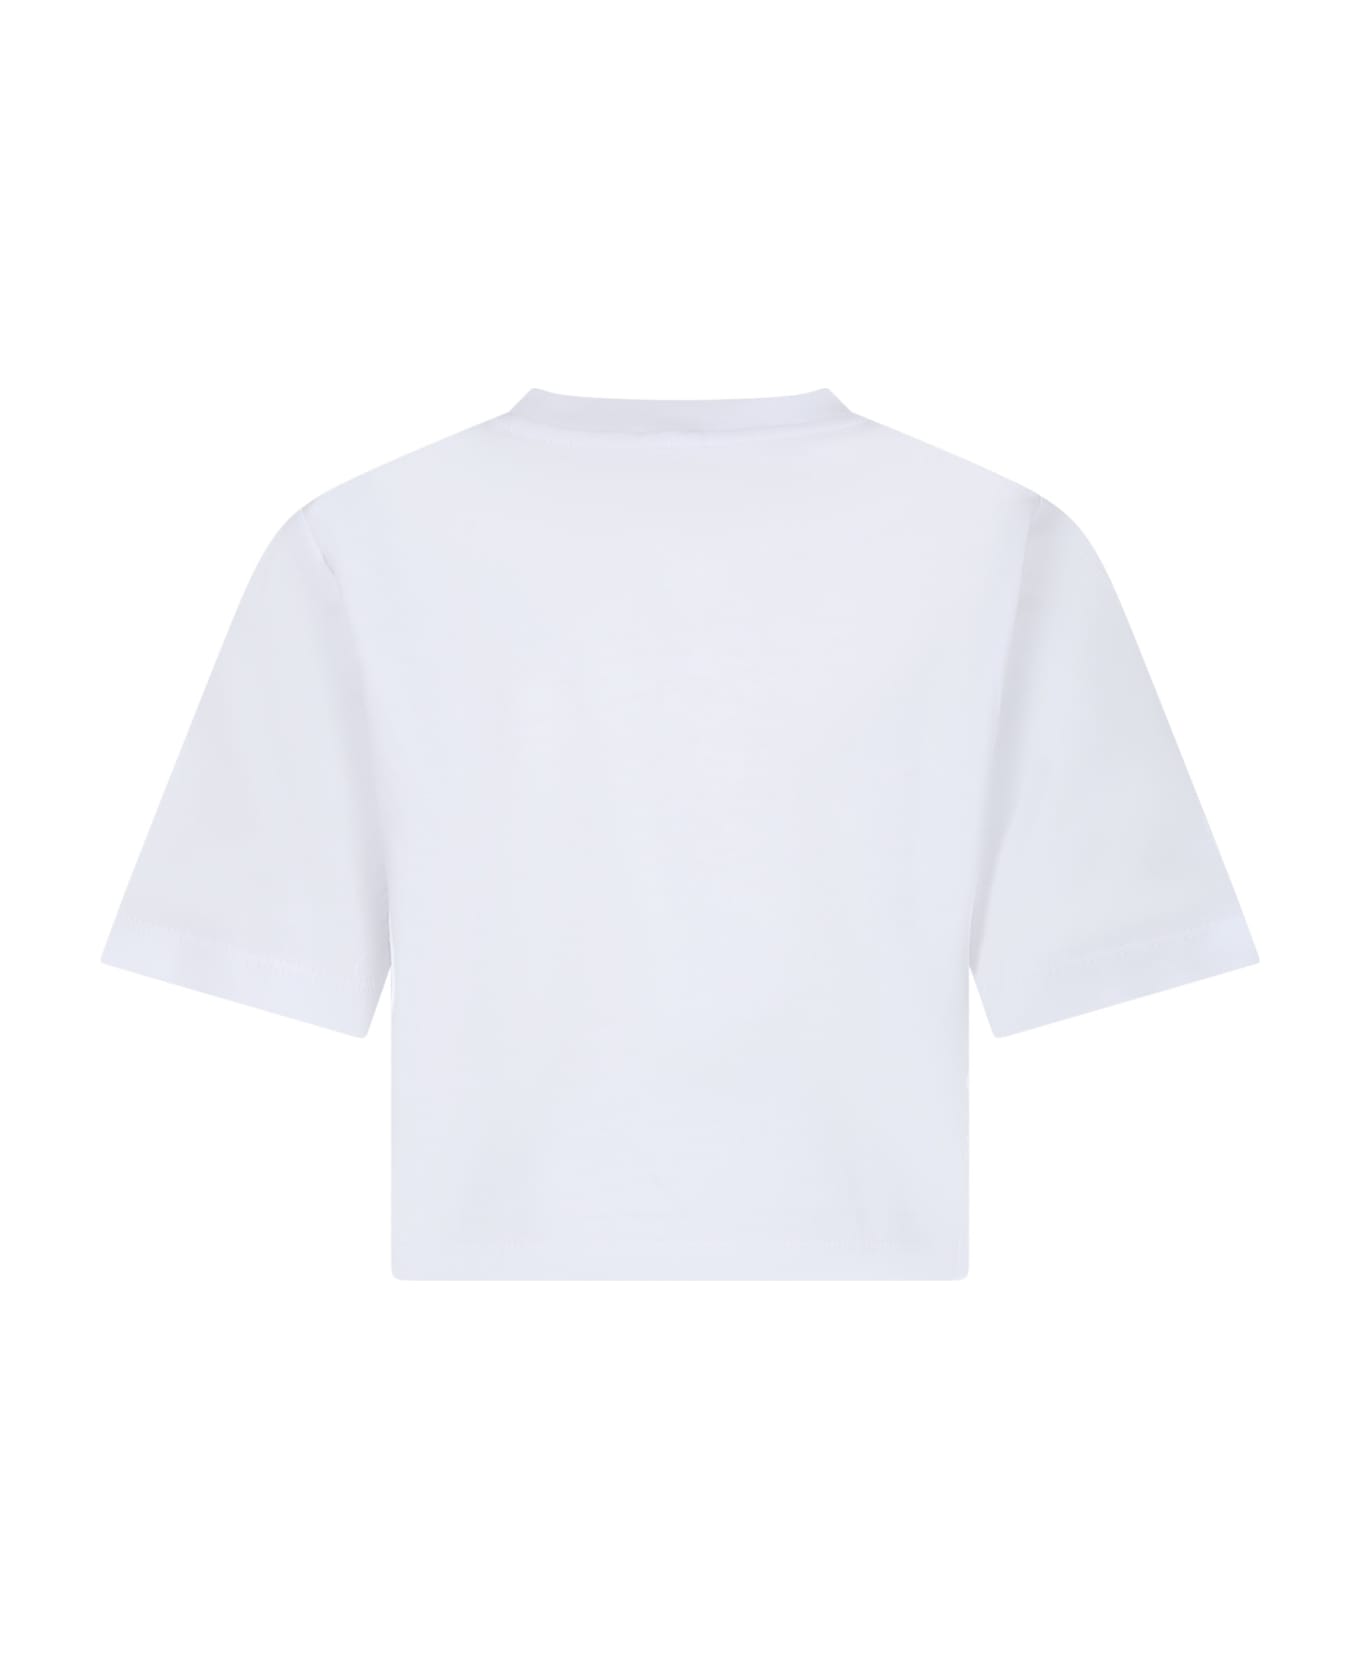 Stella McCartney Kids White T-shirt For Girl With Multicolor Print - White